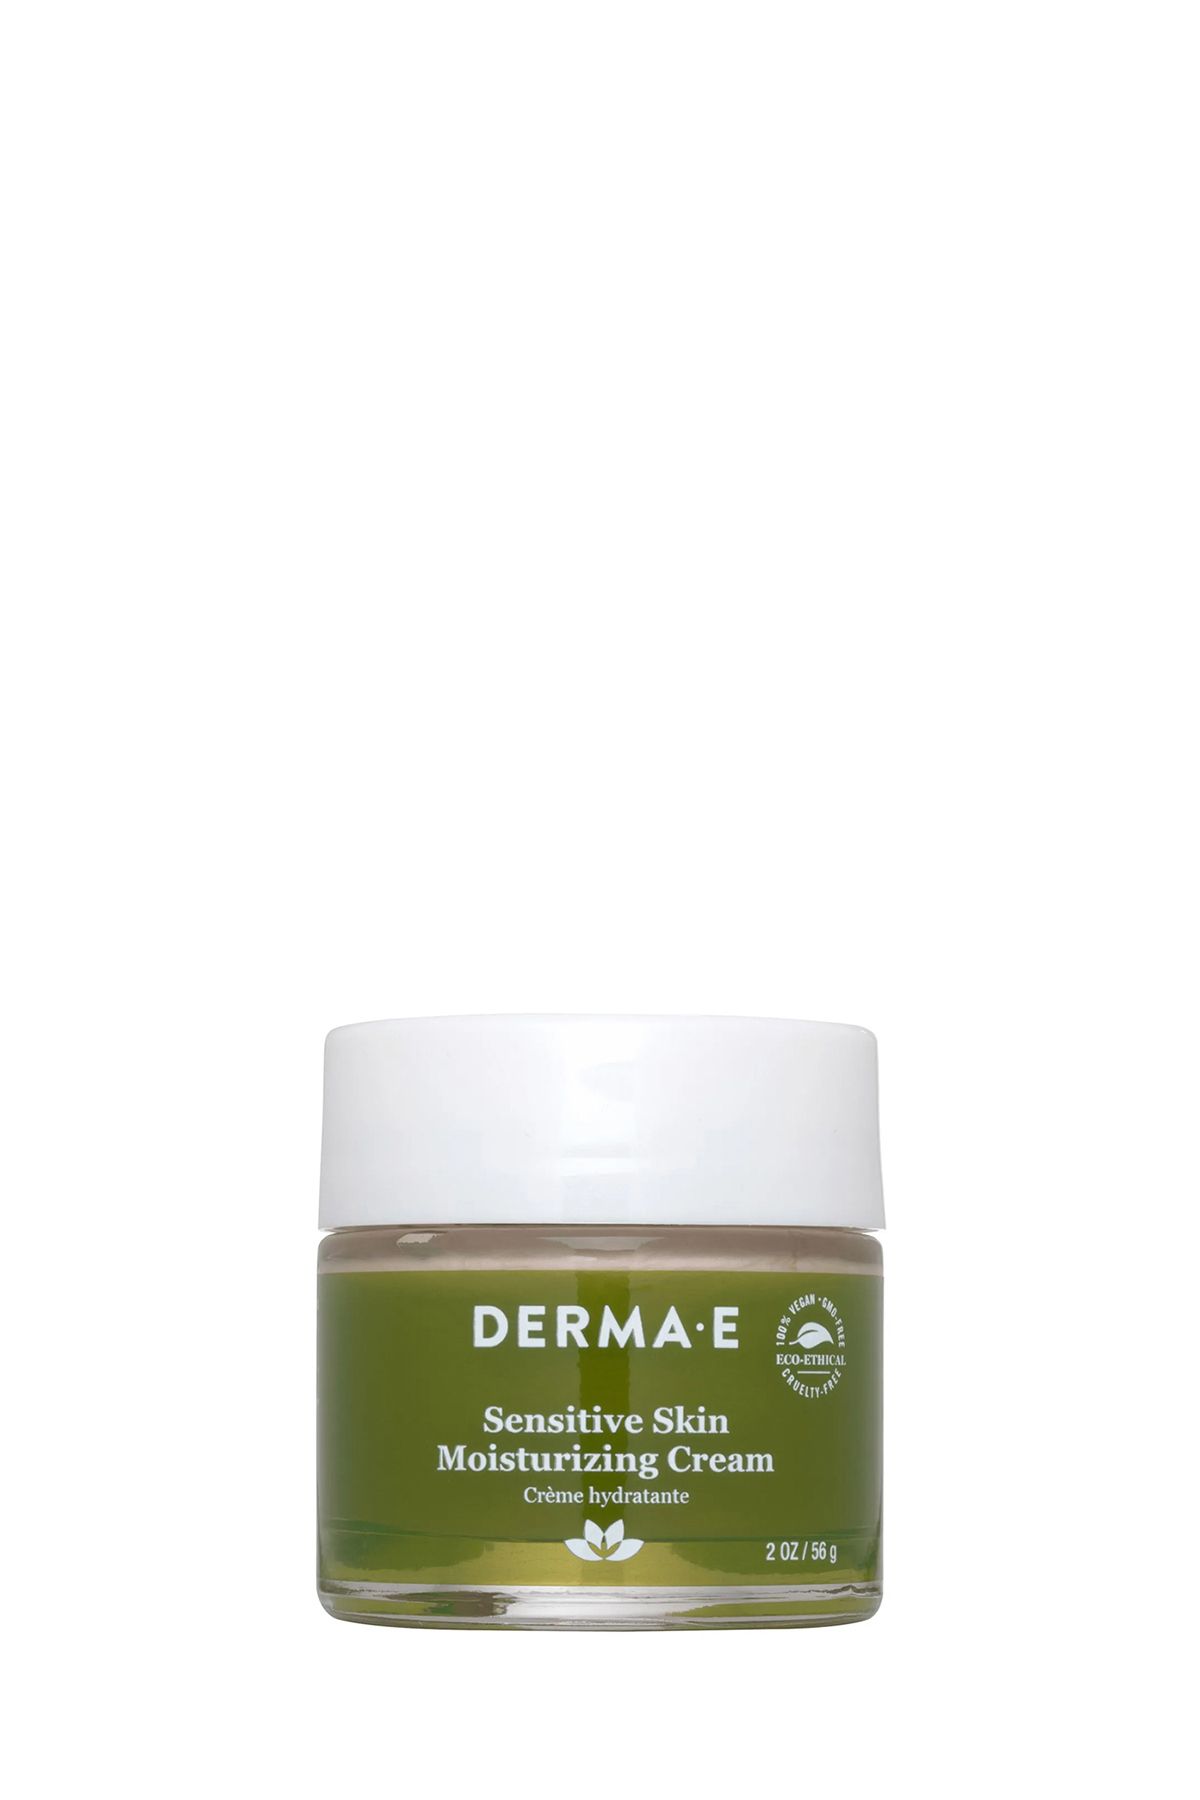 DERMA E Sensitive Skin Moisturizing Cream - 56 G